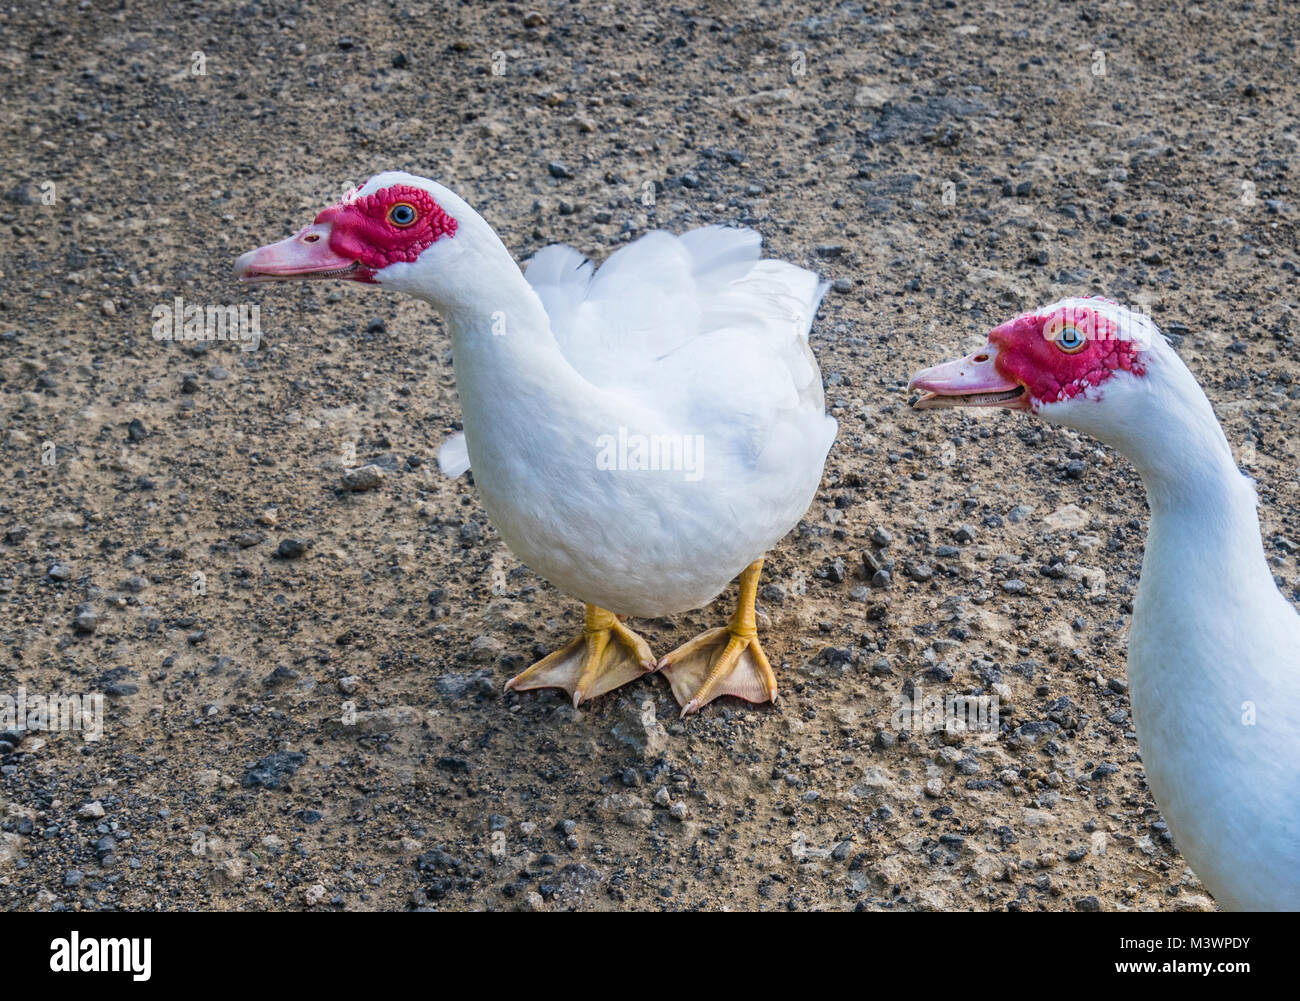 Norfolk Island, Australian external territory, white Muscovy ducks (Cairina moschata) at Watermill Valley Stock Photo